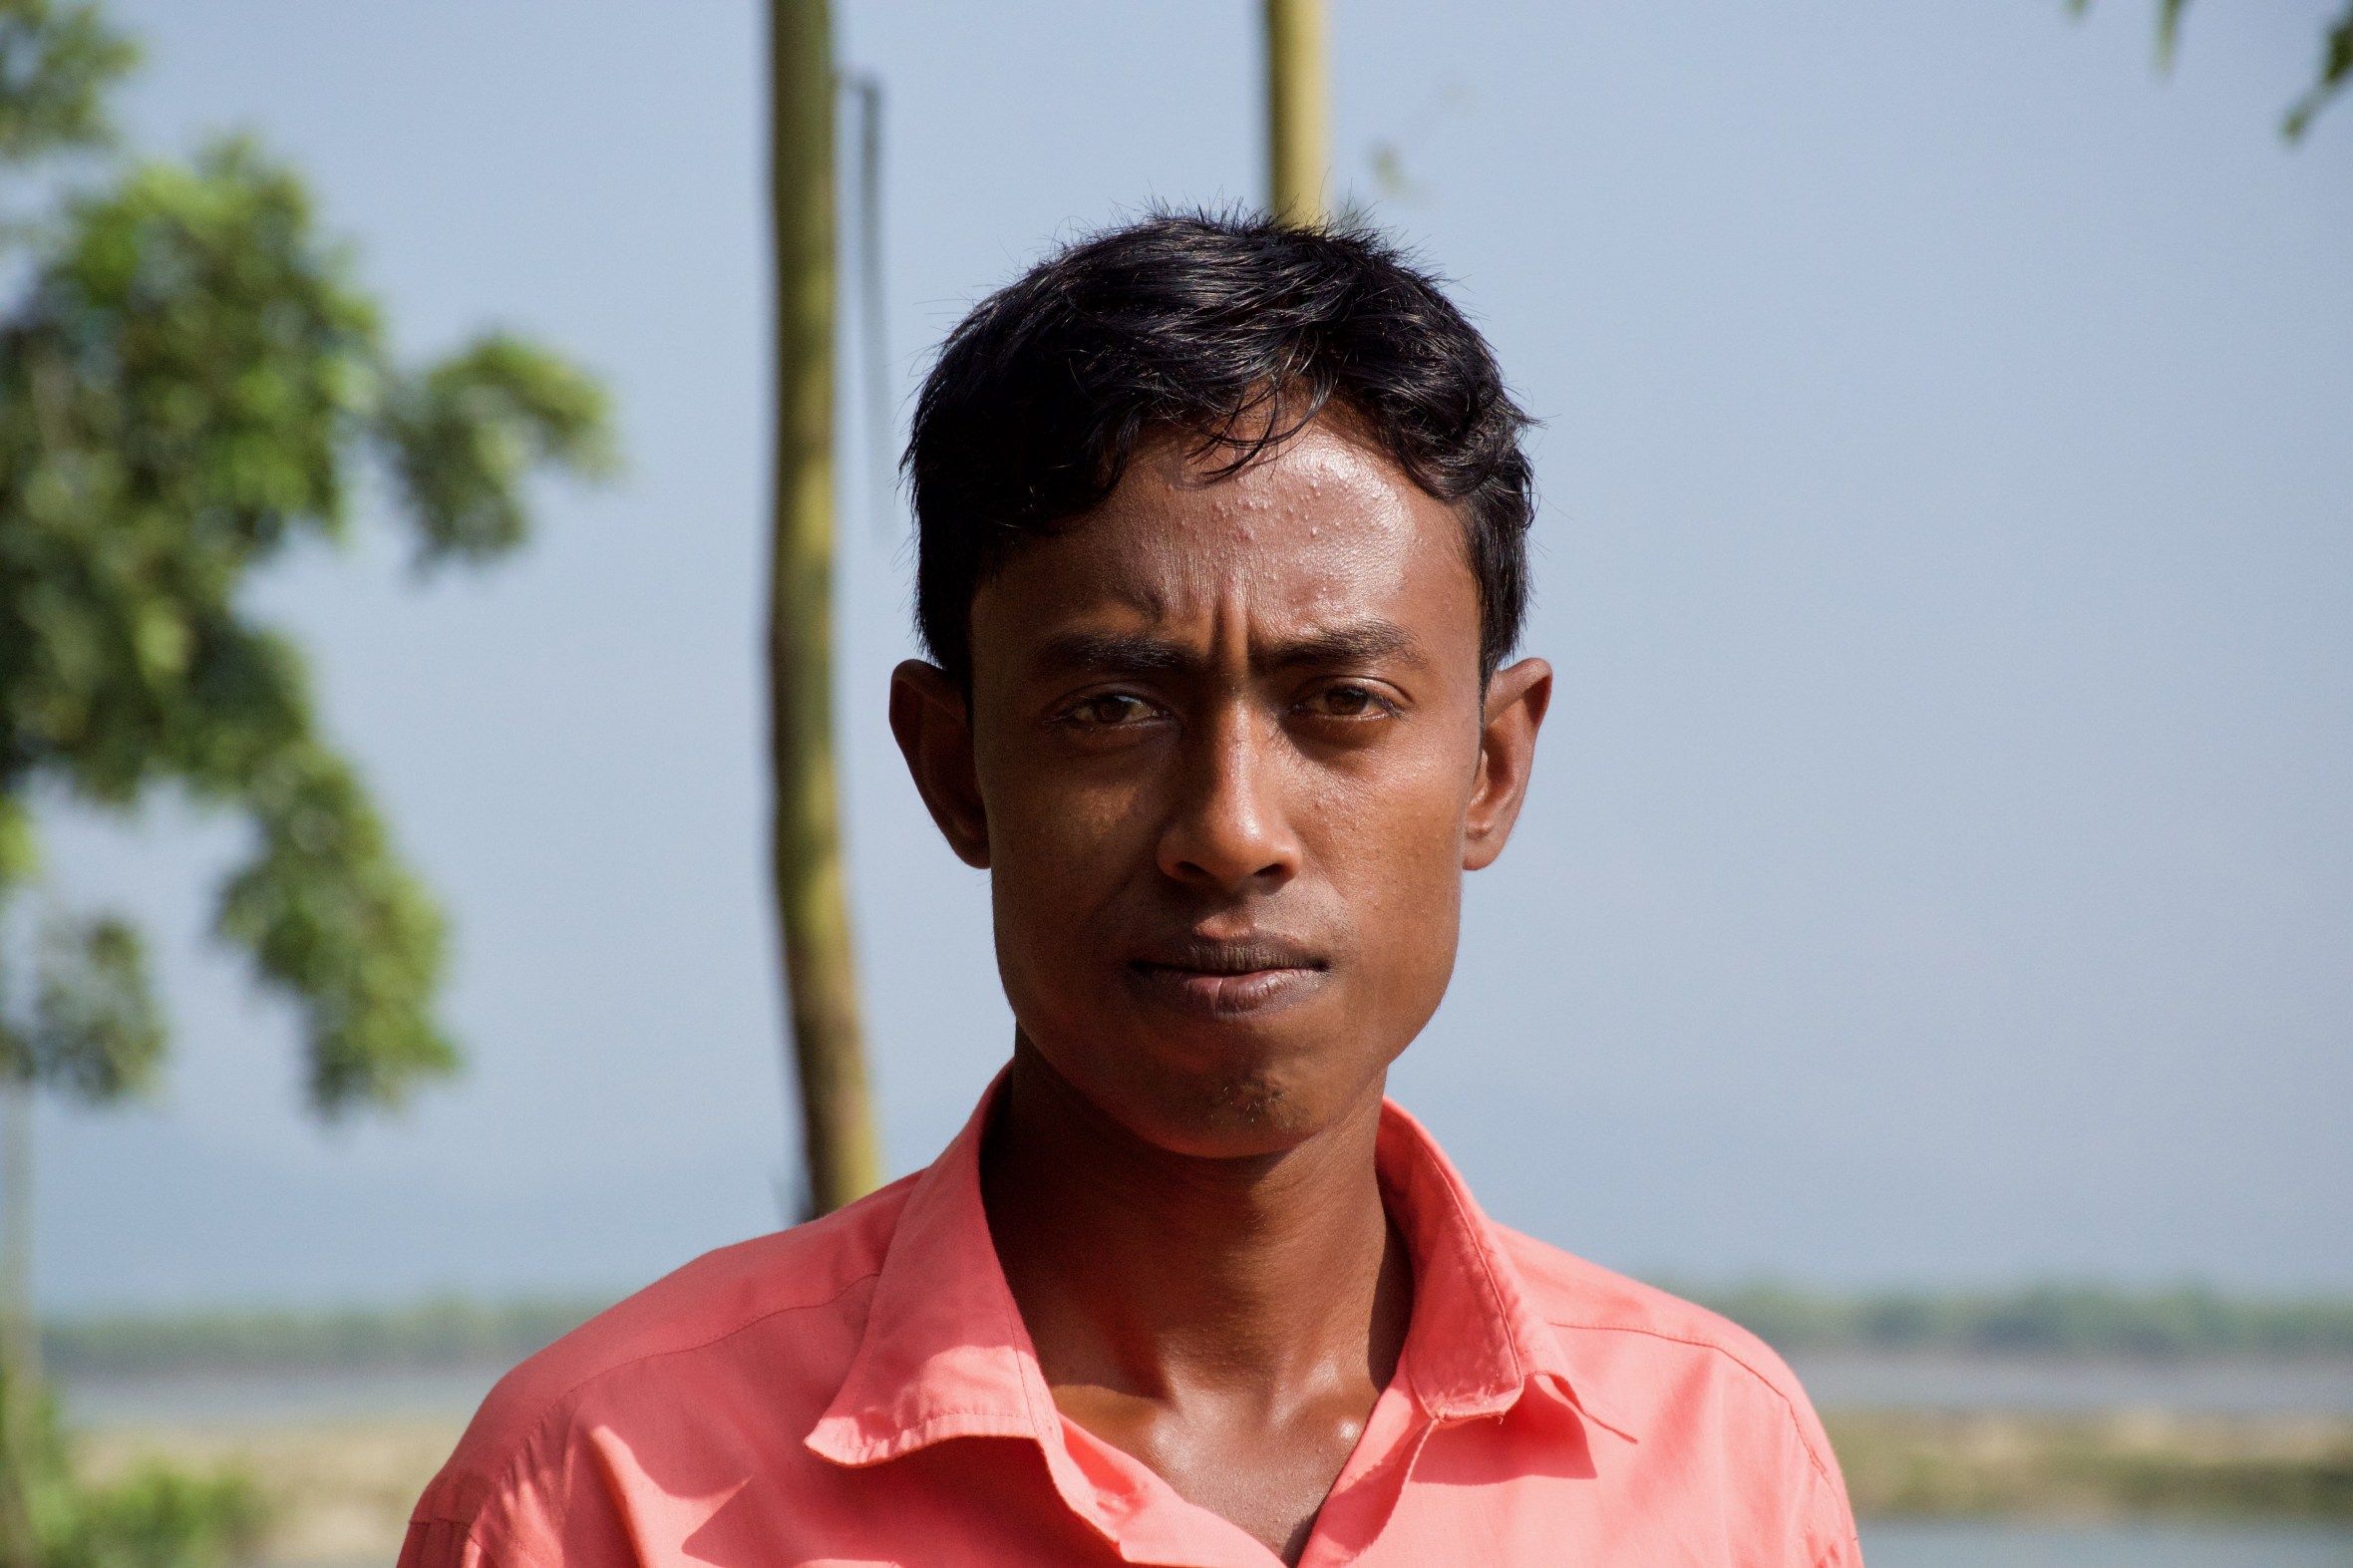 Image by Sasha Ingber. Bangladesh, 2019.